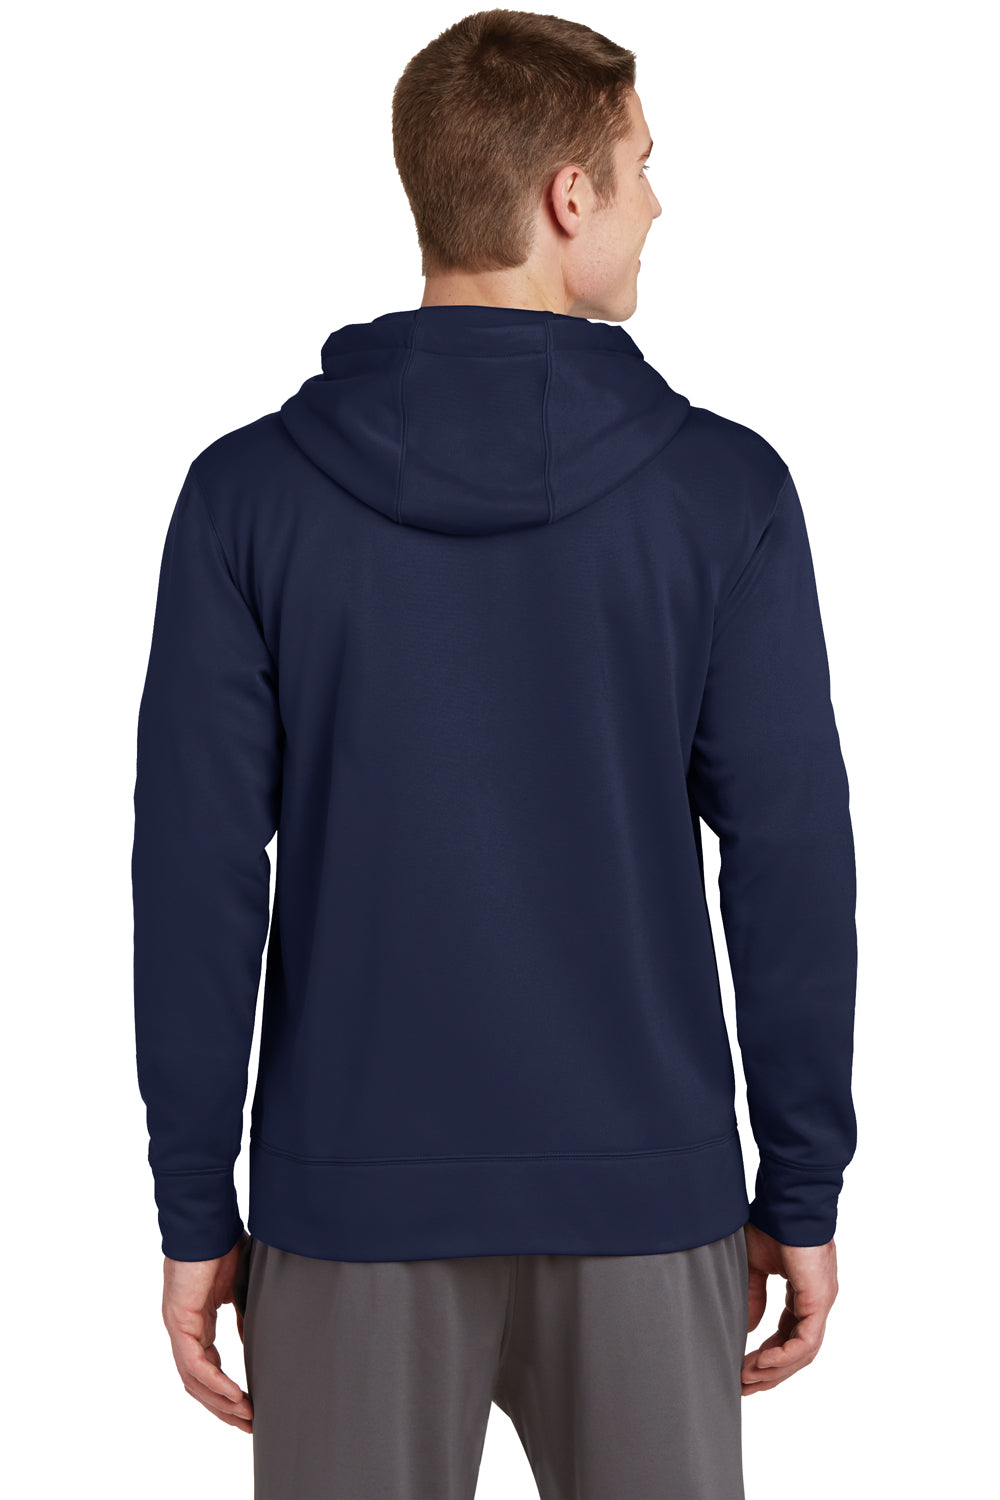 Sport-Tek ST238 Mens Sport-Wick Moisture Wicking Fleece Full Zip Hooded Sweatshirt Hoodie Navy Blue Back